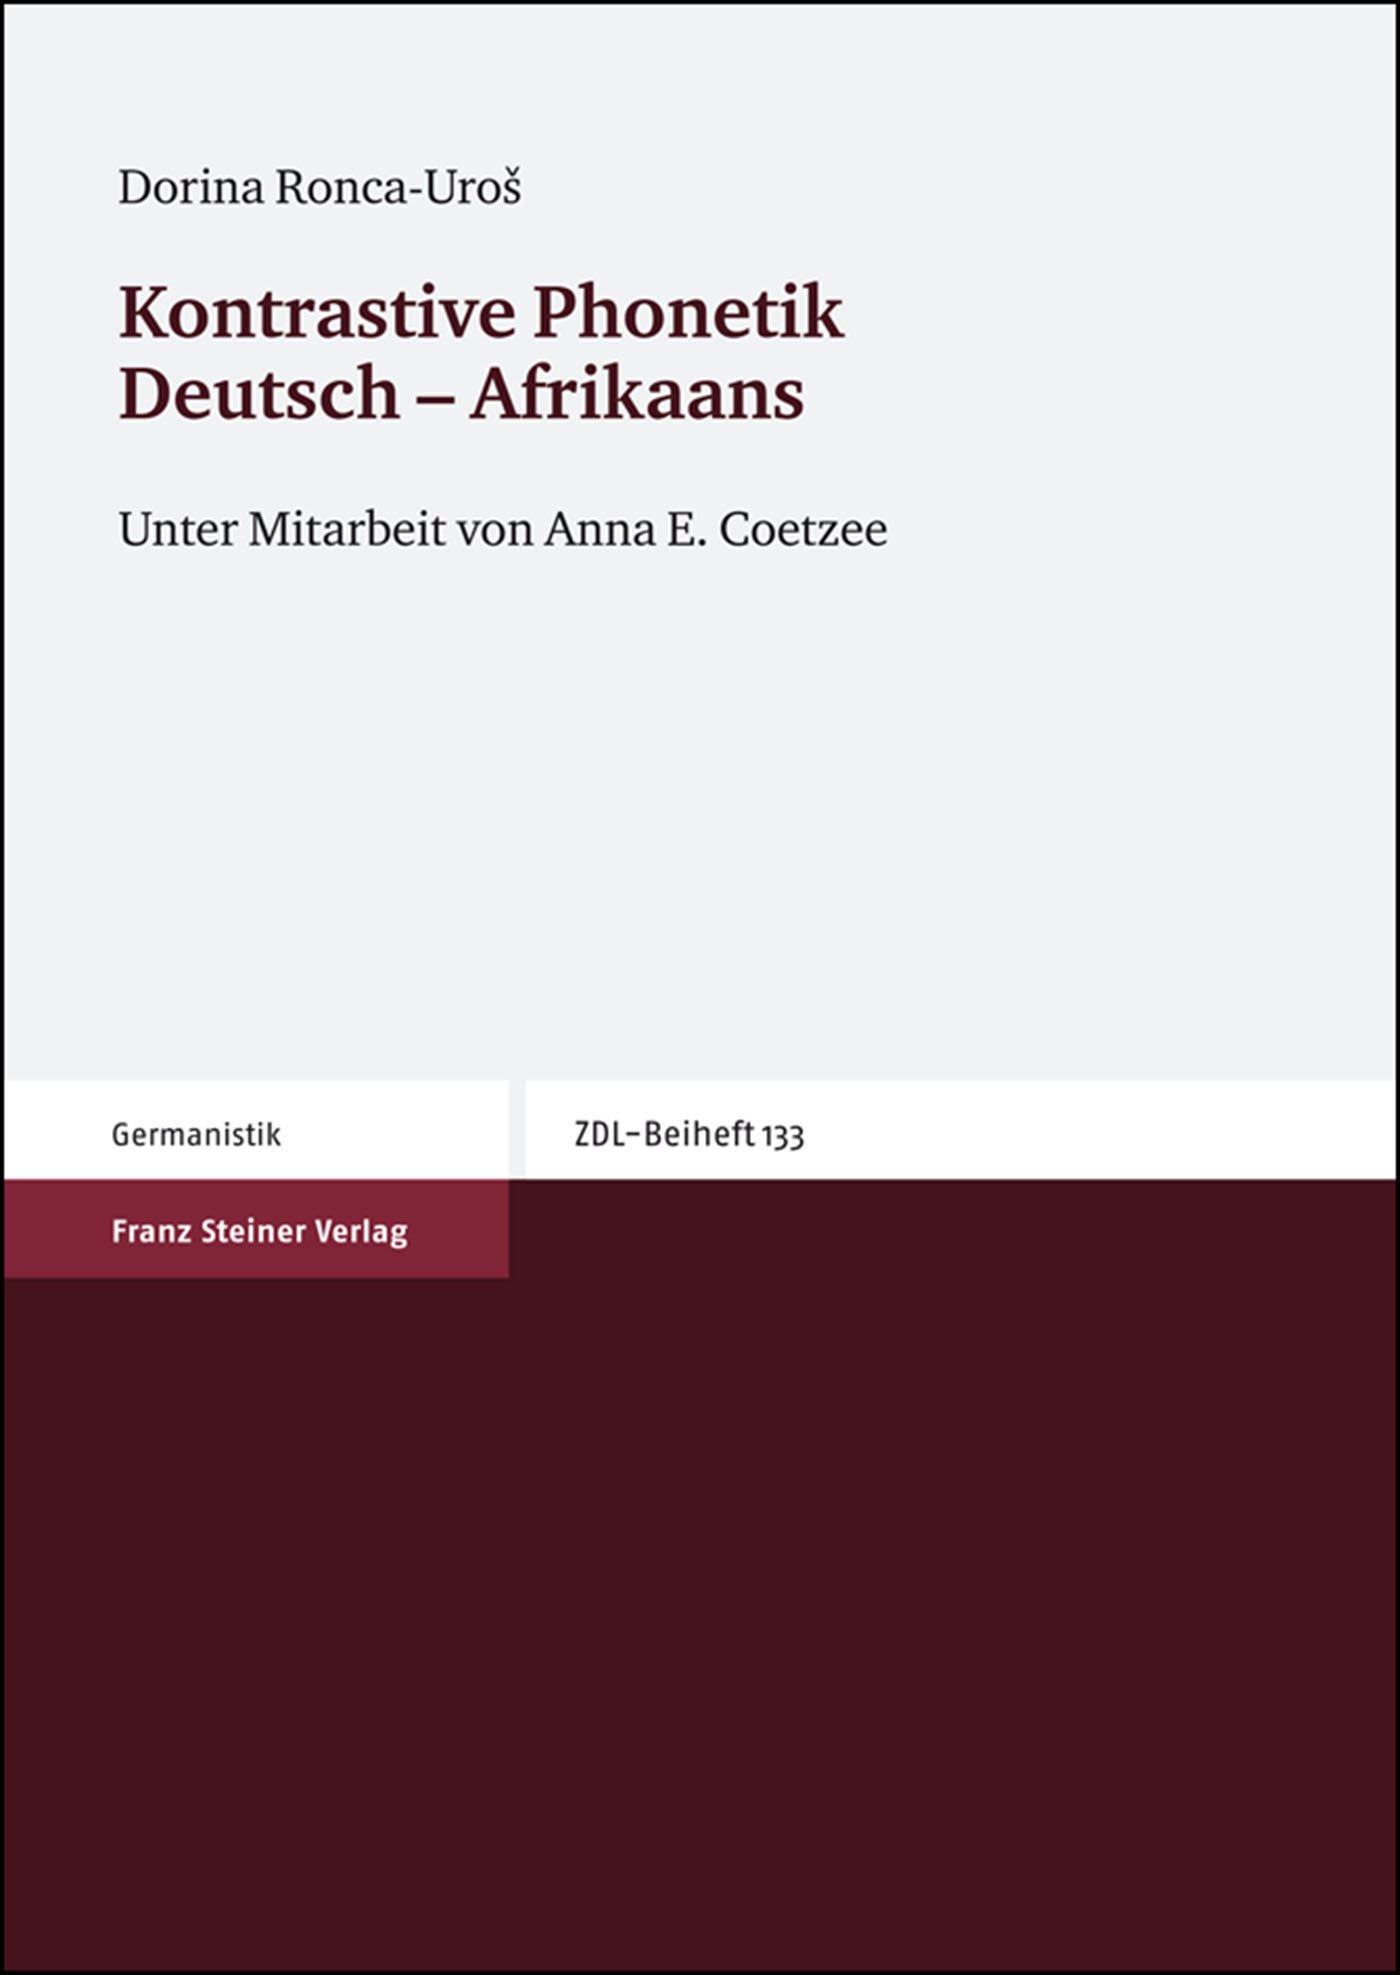 Kontrastive Phonetik Deutsch – Afrikaans